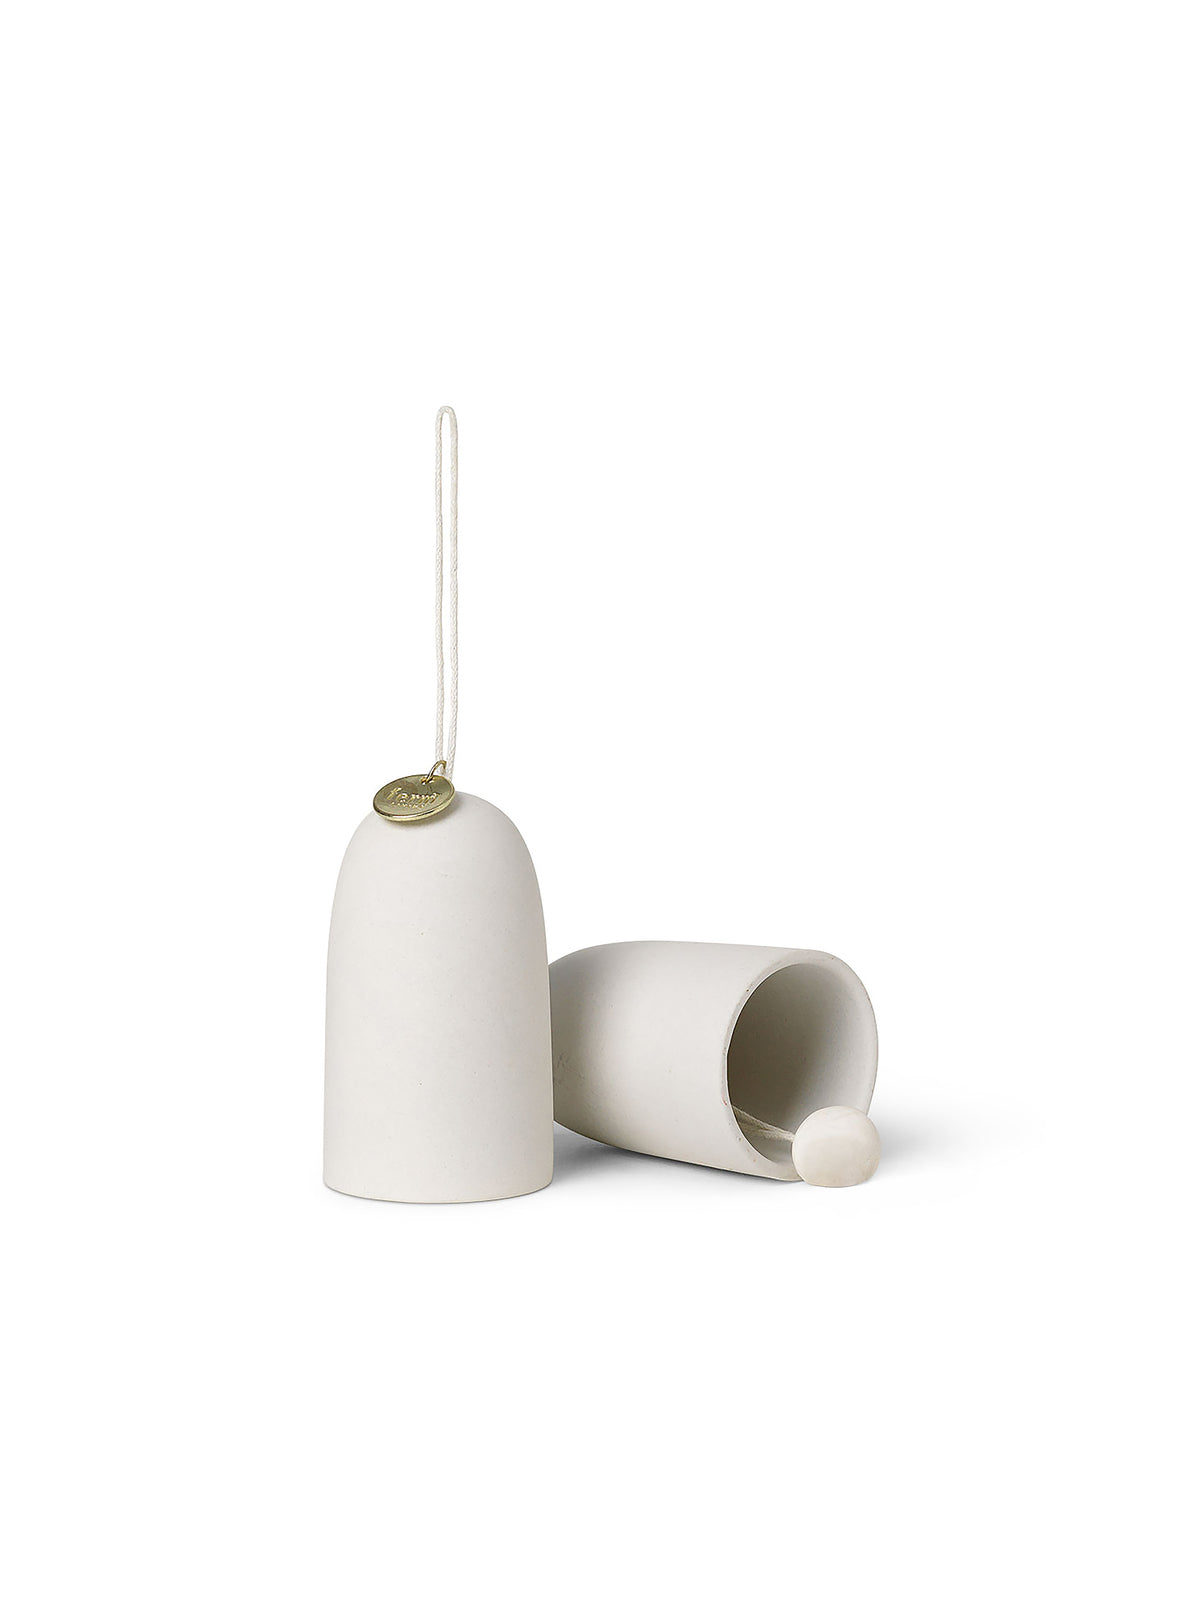 Bell Ornaments | Ceramic | Set of 2 | Off-White | by ferm Living - Lifestory - ferm Living